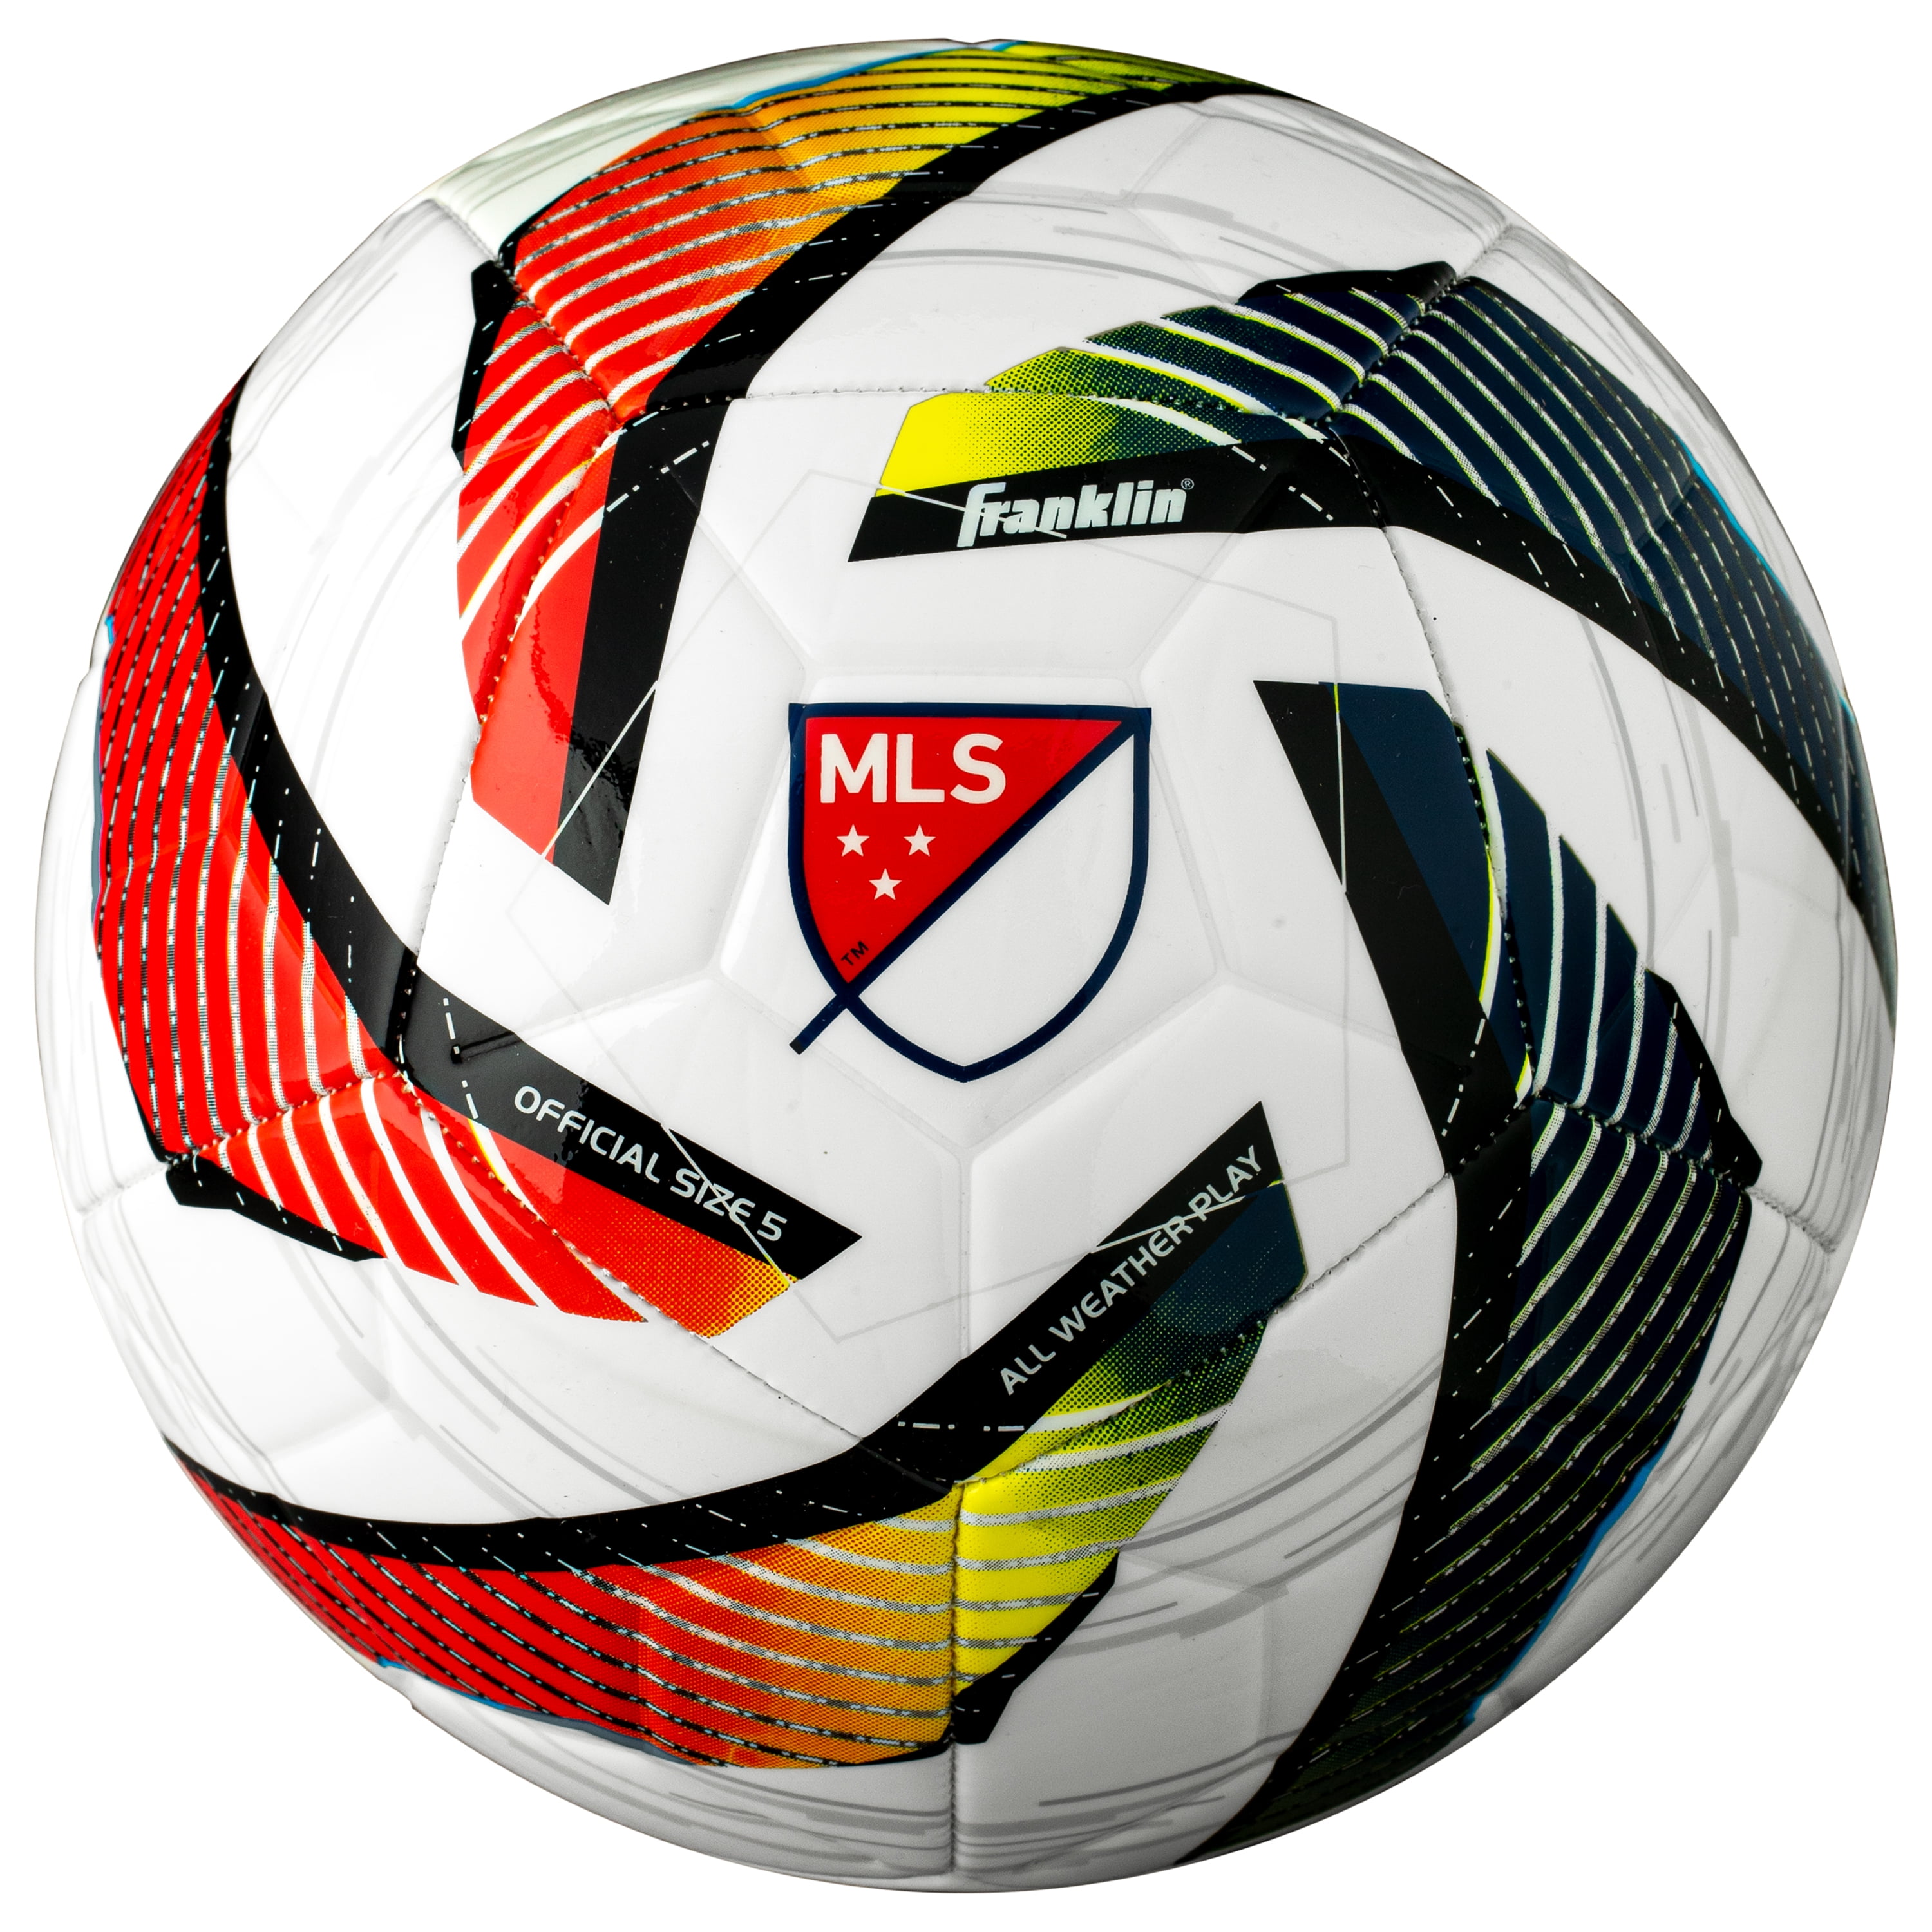 Franklin Sports MLS Tornado Soccer Ball - Size 5